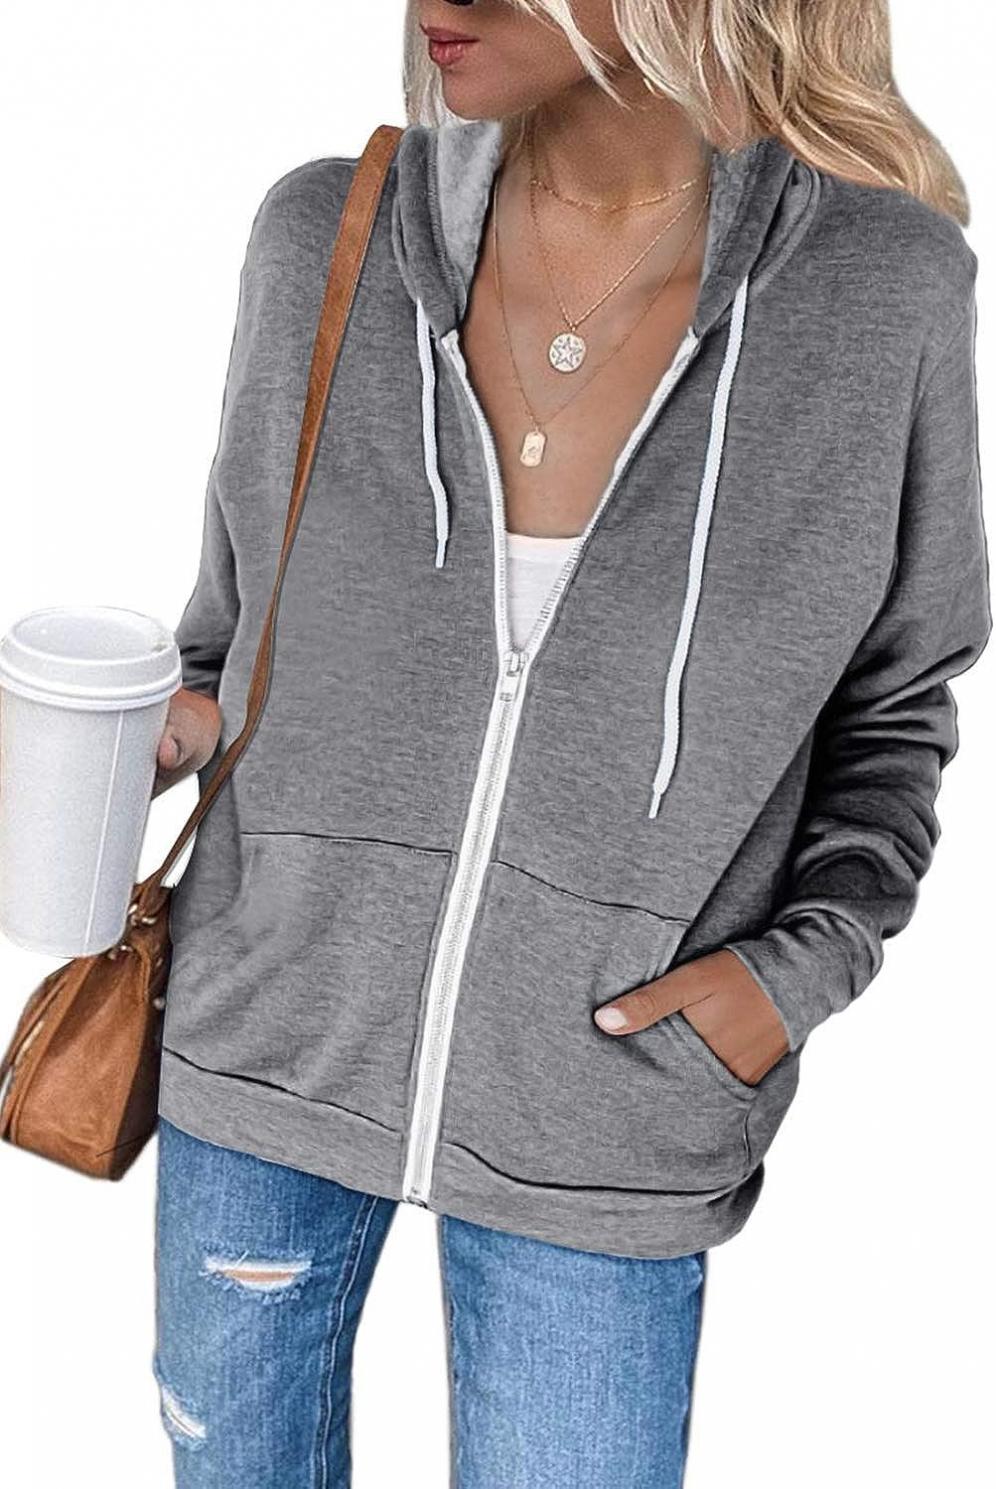 Acelitt Women Casual Long Sleeve Zip Up Hooded Sweatshirts Hoodies with Pockets, S-XXL